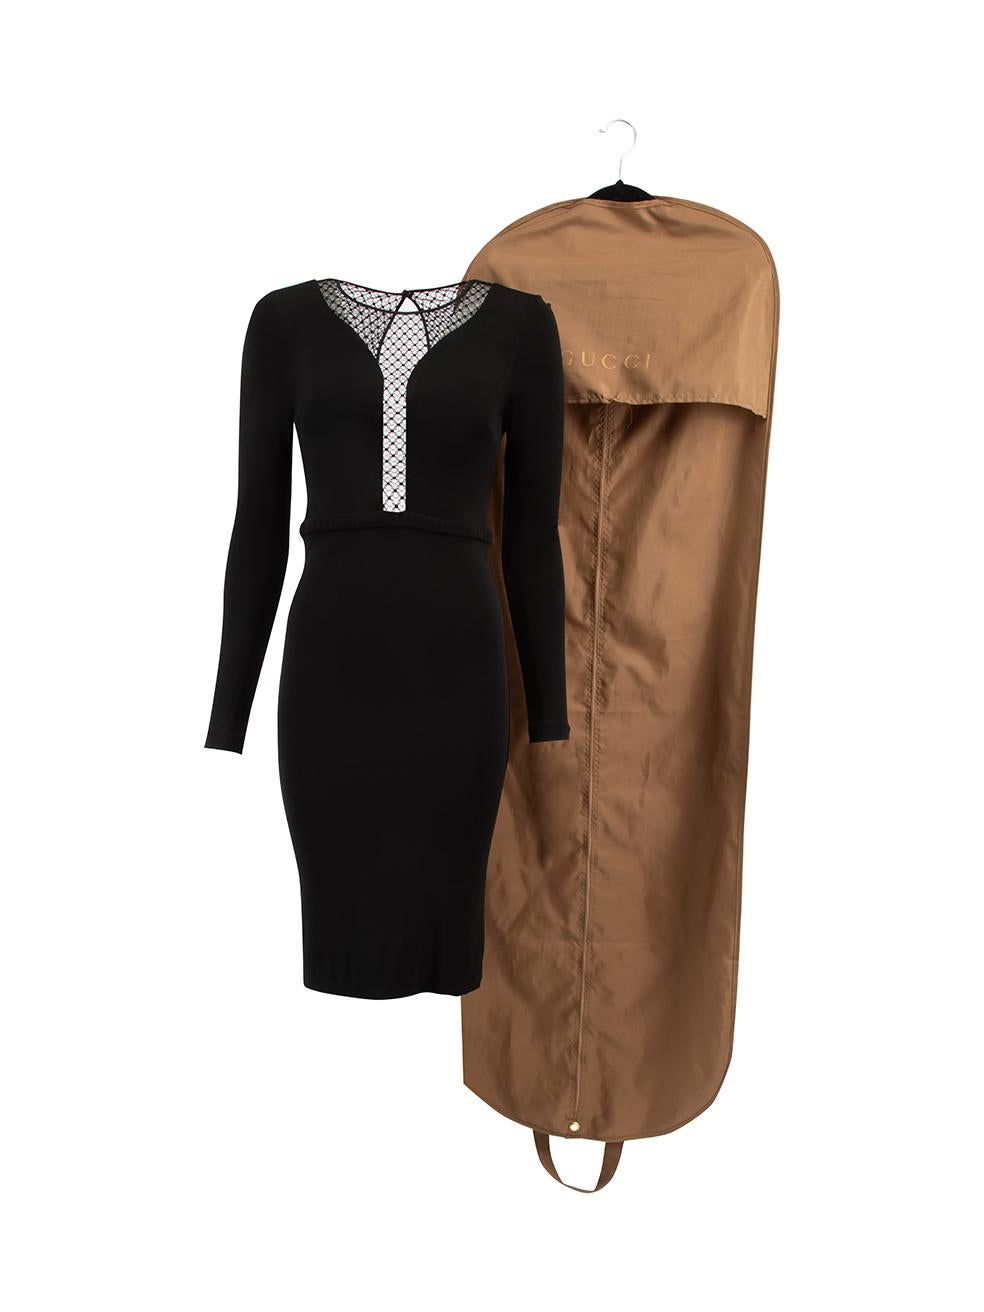 Gucci Women's Black Mesh Panel Long Sleeve Dress For Sale 1